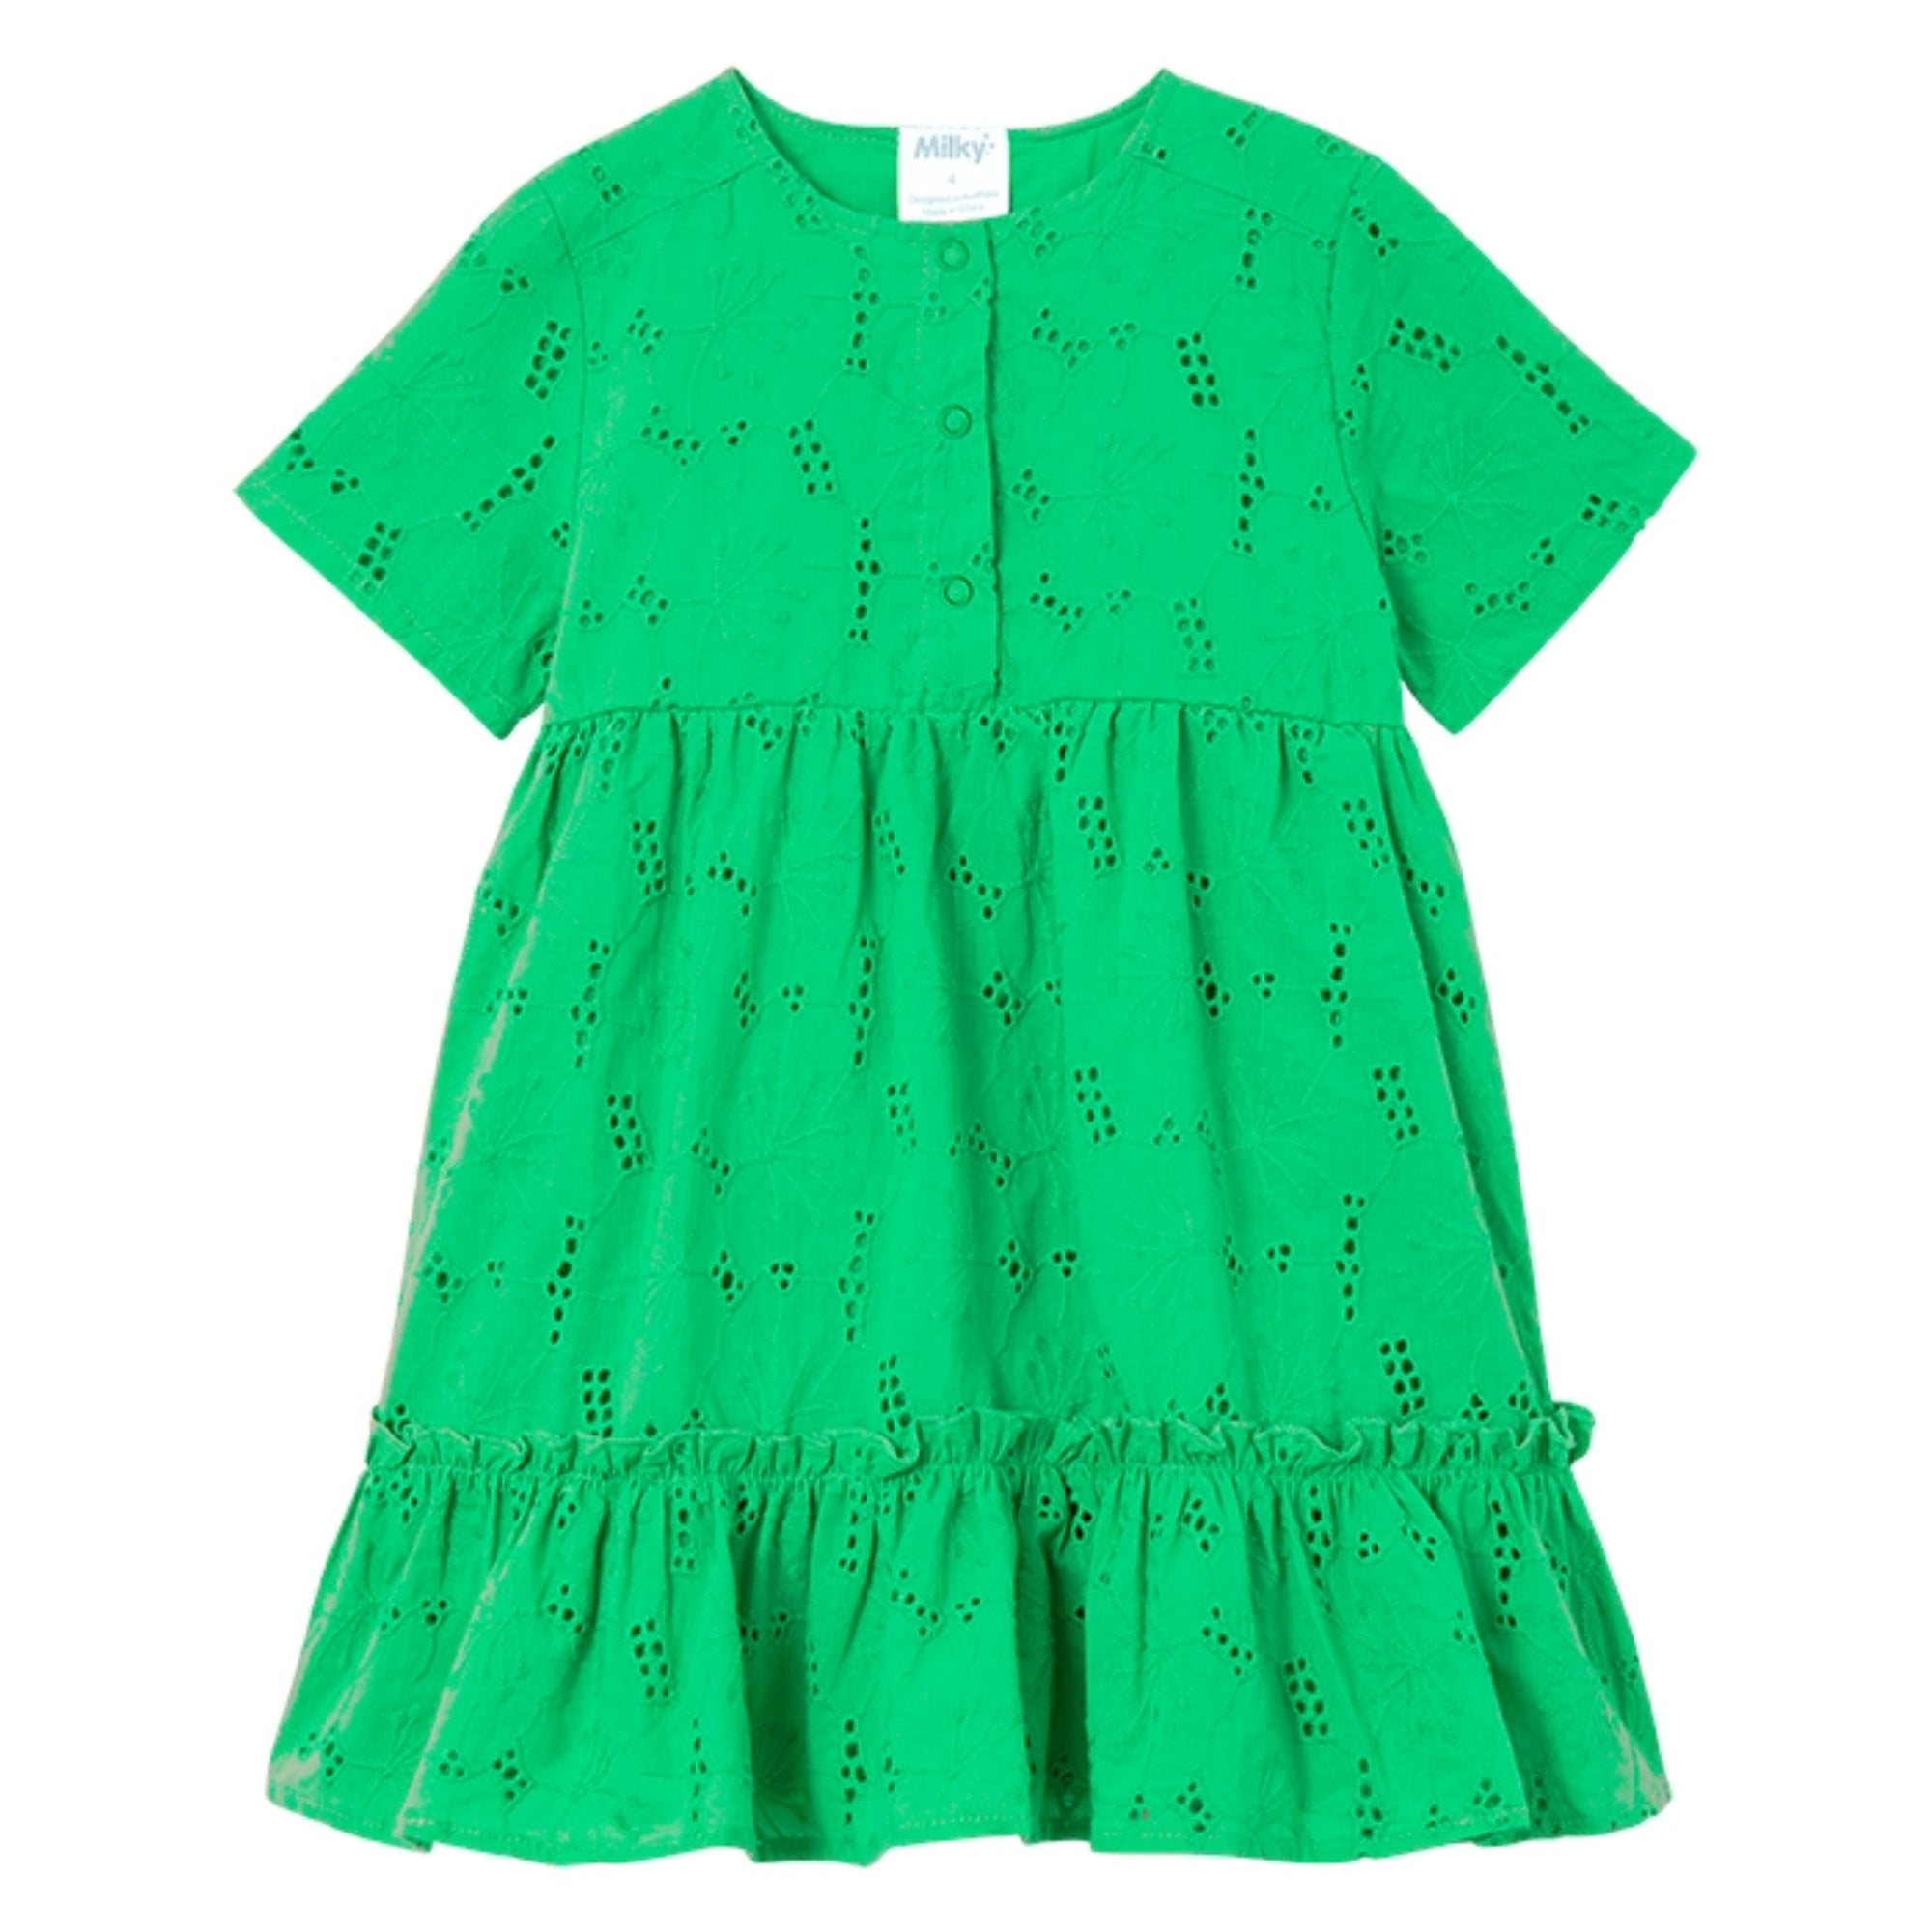 Milky Green Broderie Dress